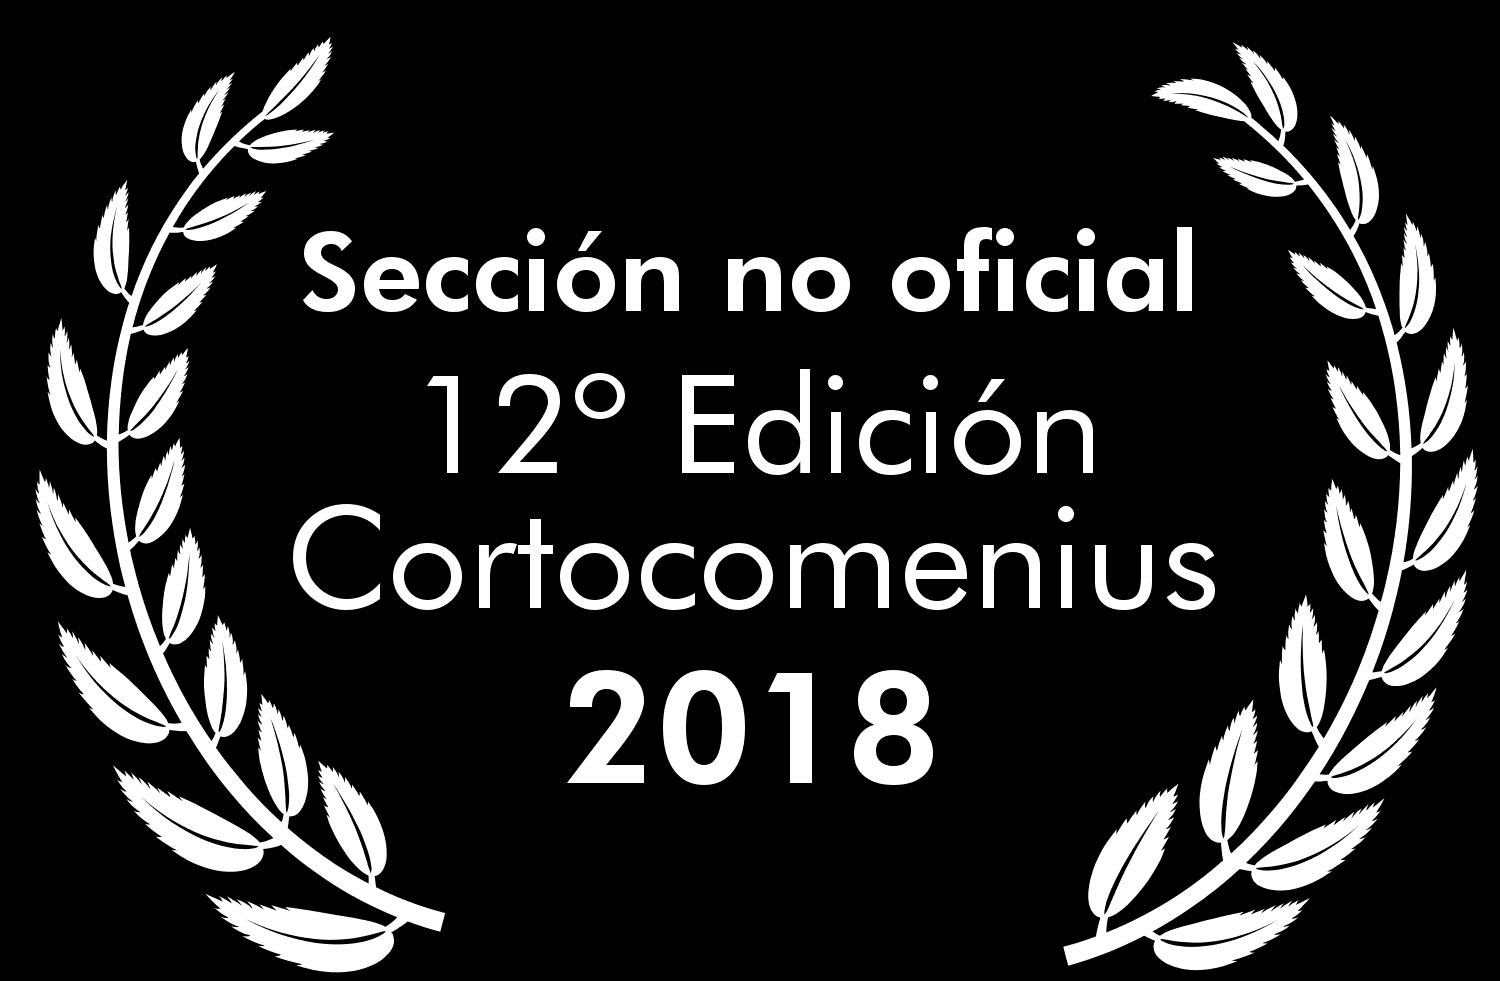 Award Cortocomenius